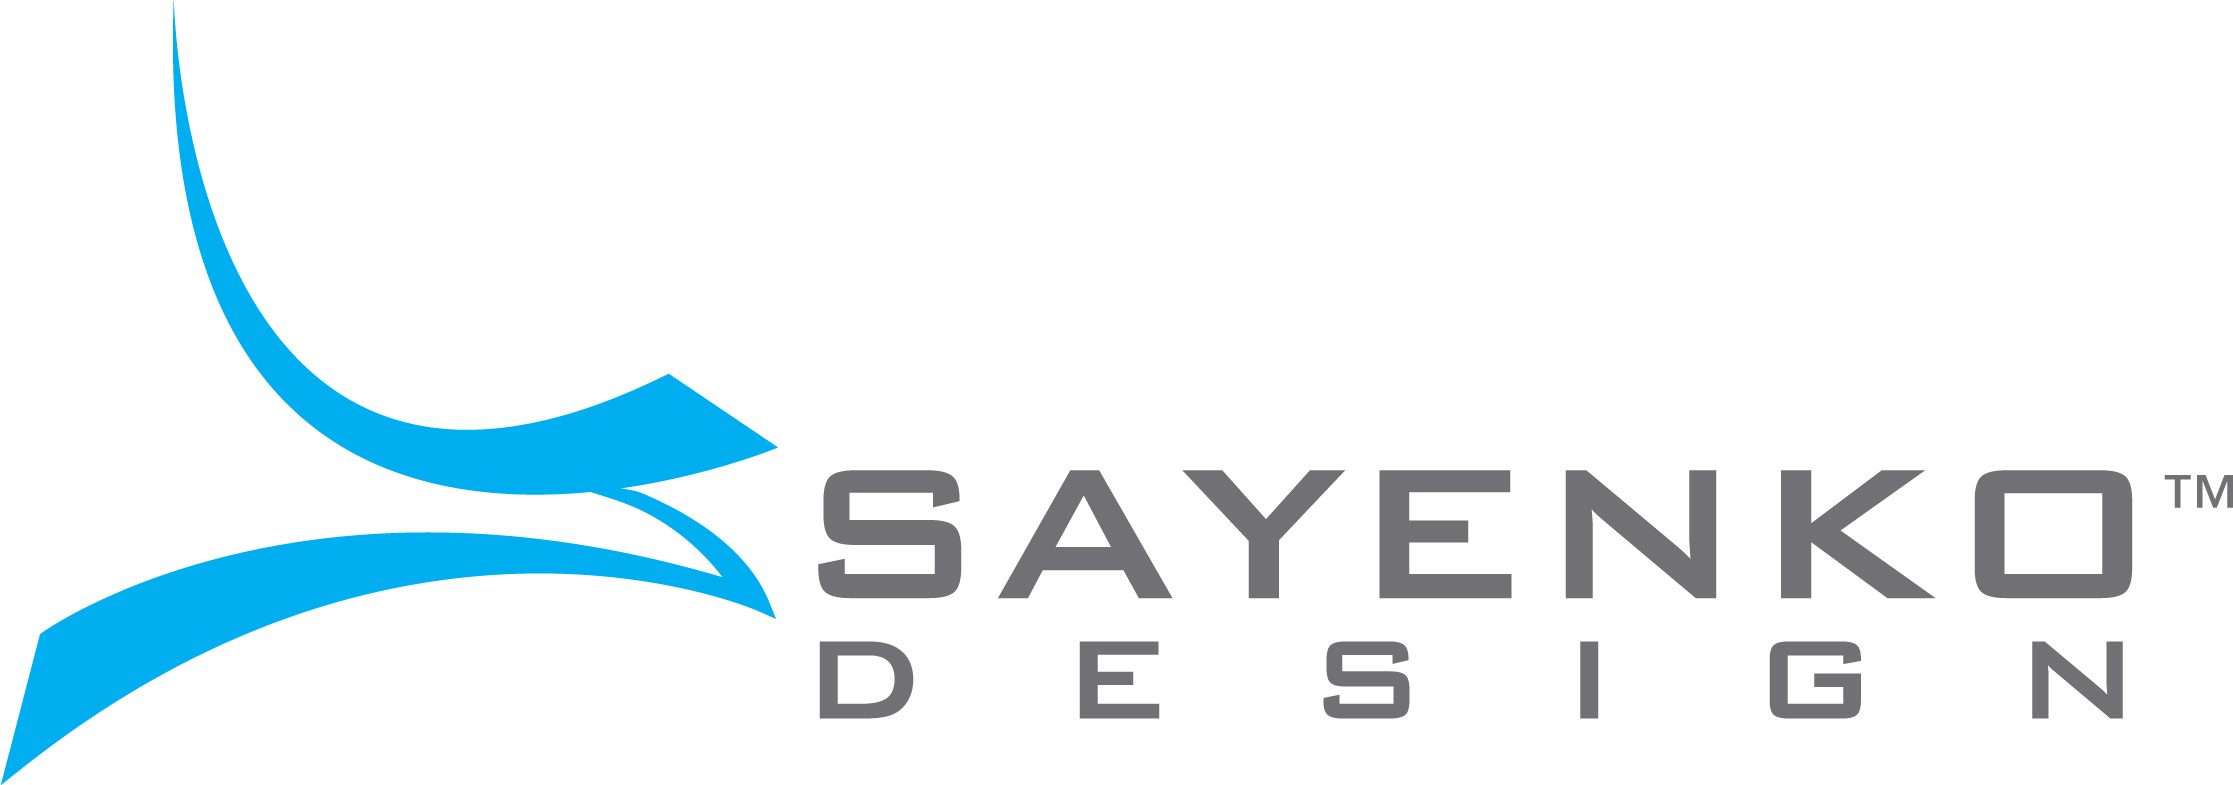 Top Seattle Web Design Company Logo: Sayenko Design